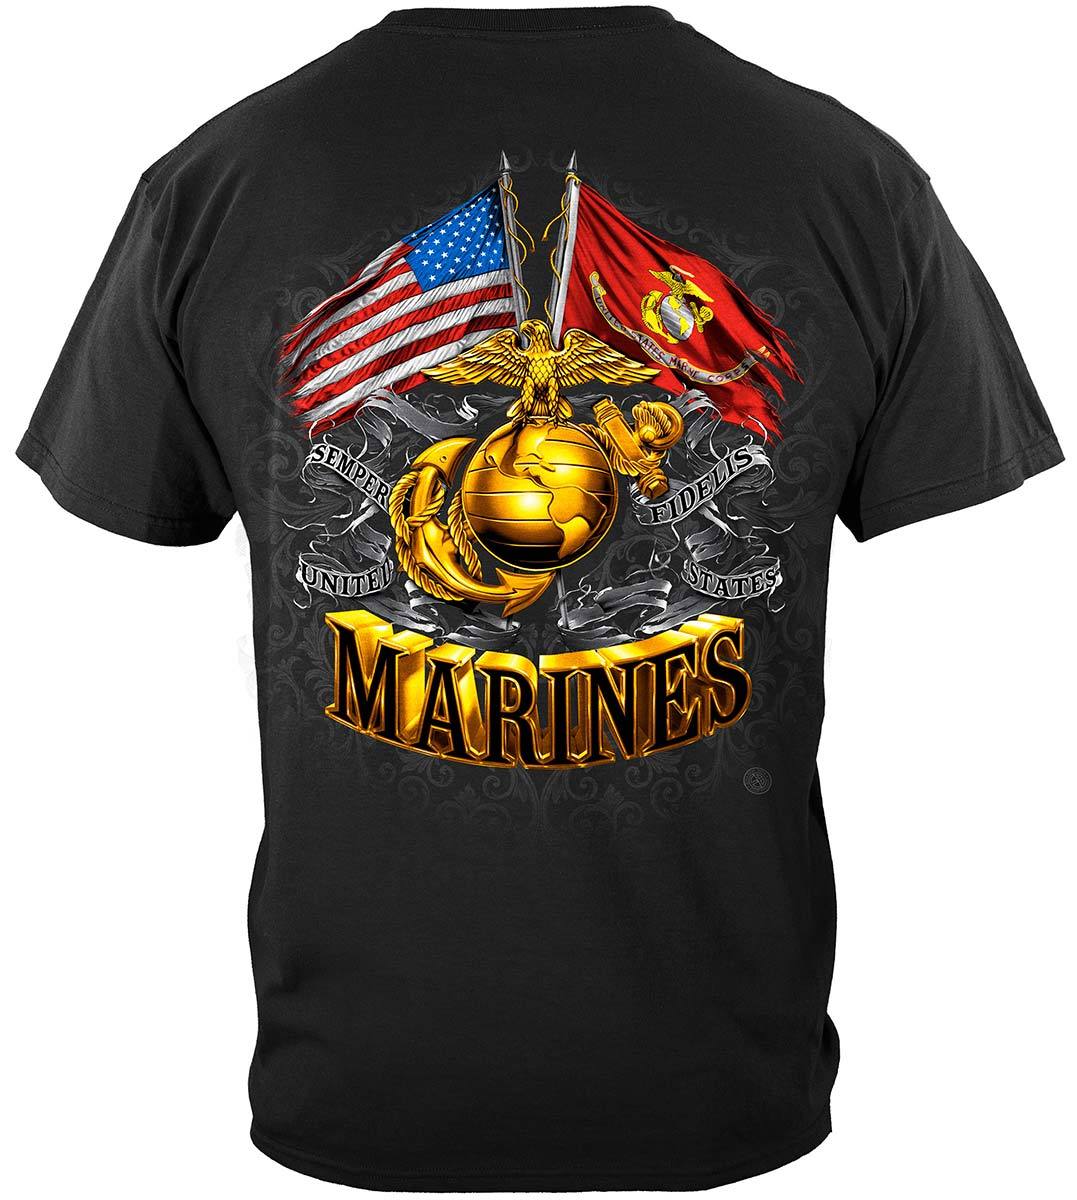 Double Flag Gold Globe Marine Corps Premium Long Sleeves